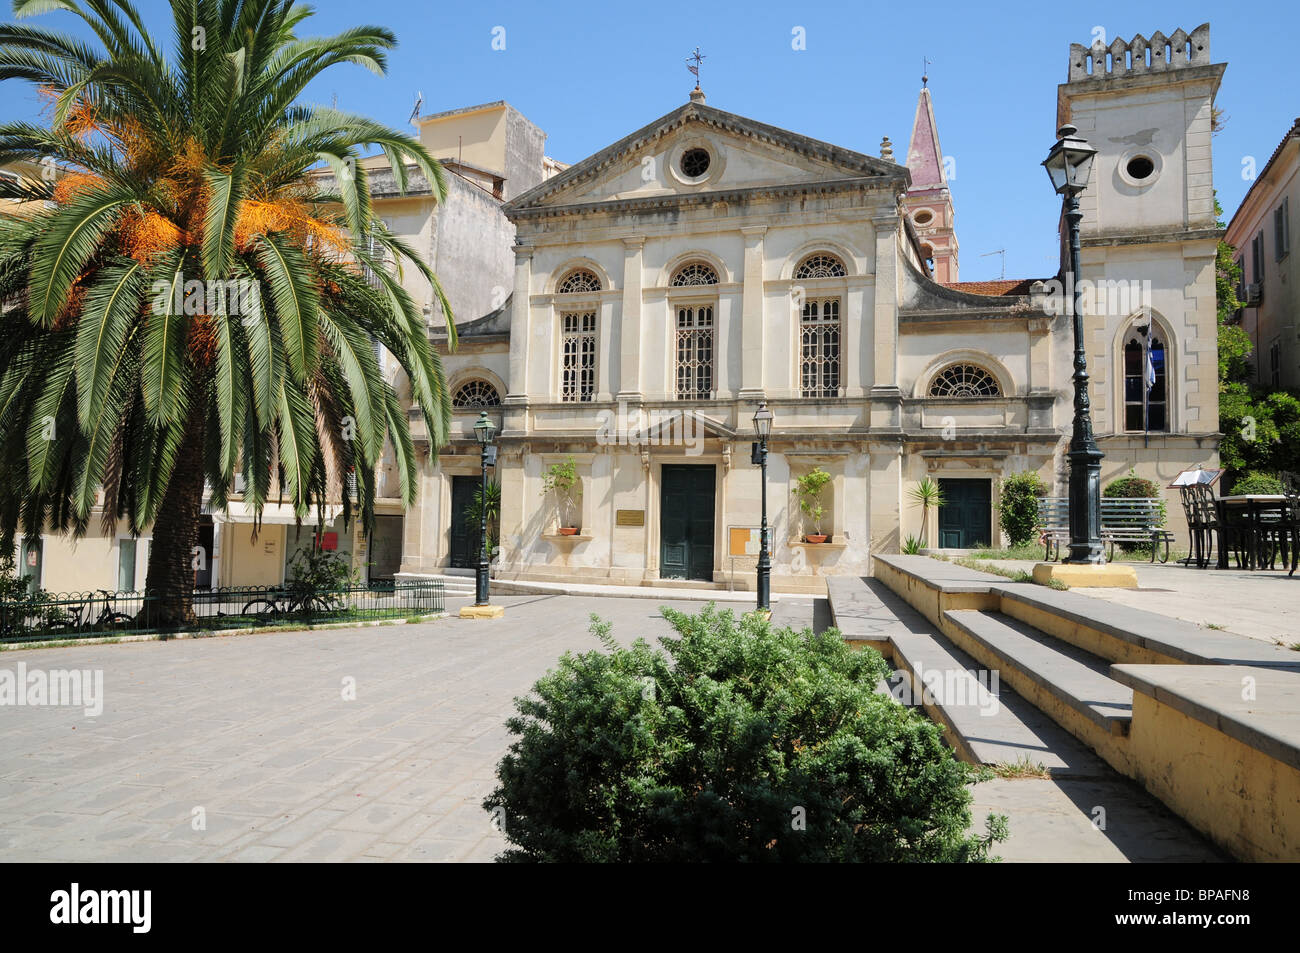 Cathedral of St James, Corfu, Mediterranean, Europe Stock Photo